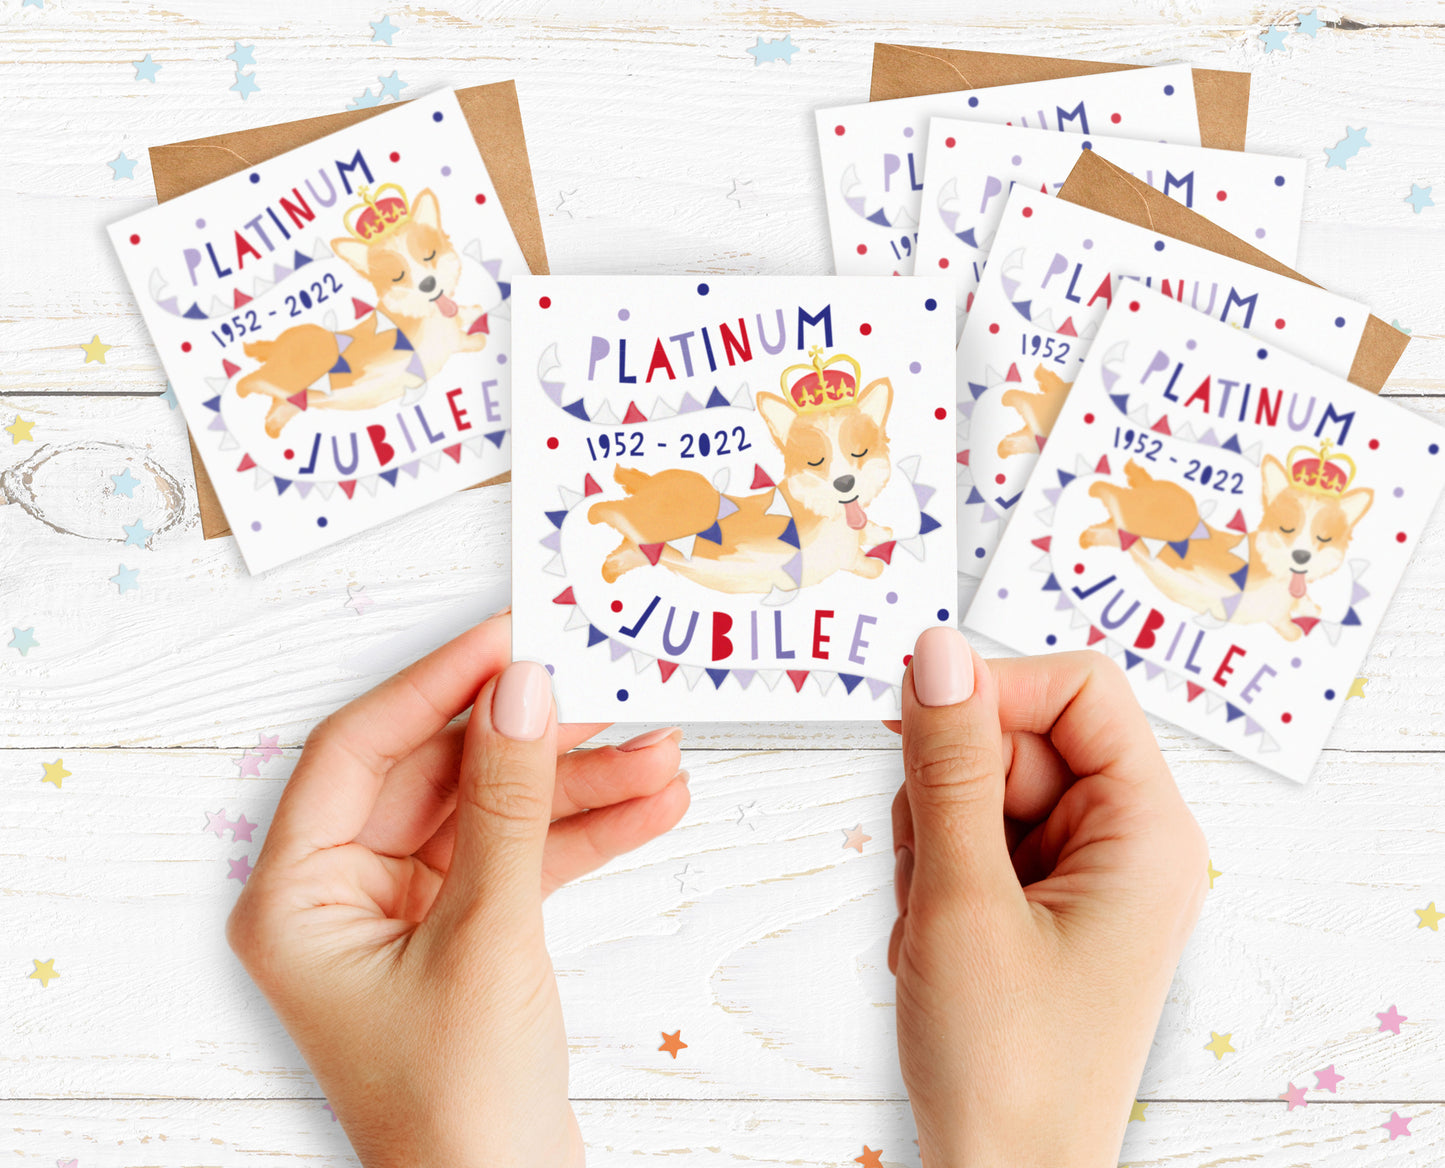 Platinum Jubilee Corgi Mini Cards. Cute Corgi Cards. Royal Design. Queen's Jubilee Celebration Cards. Pack of cards.